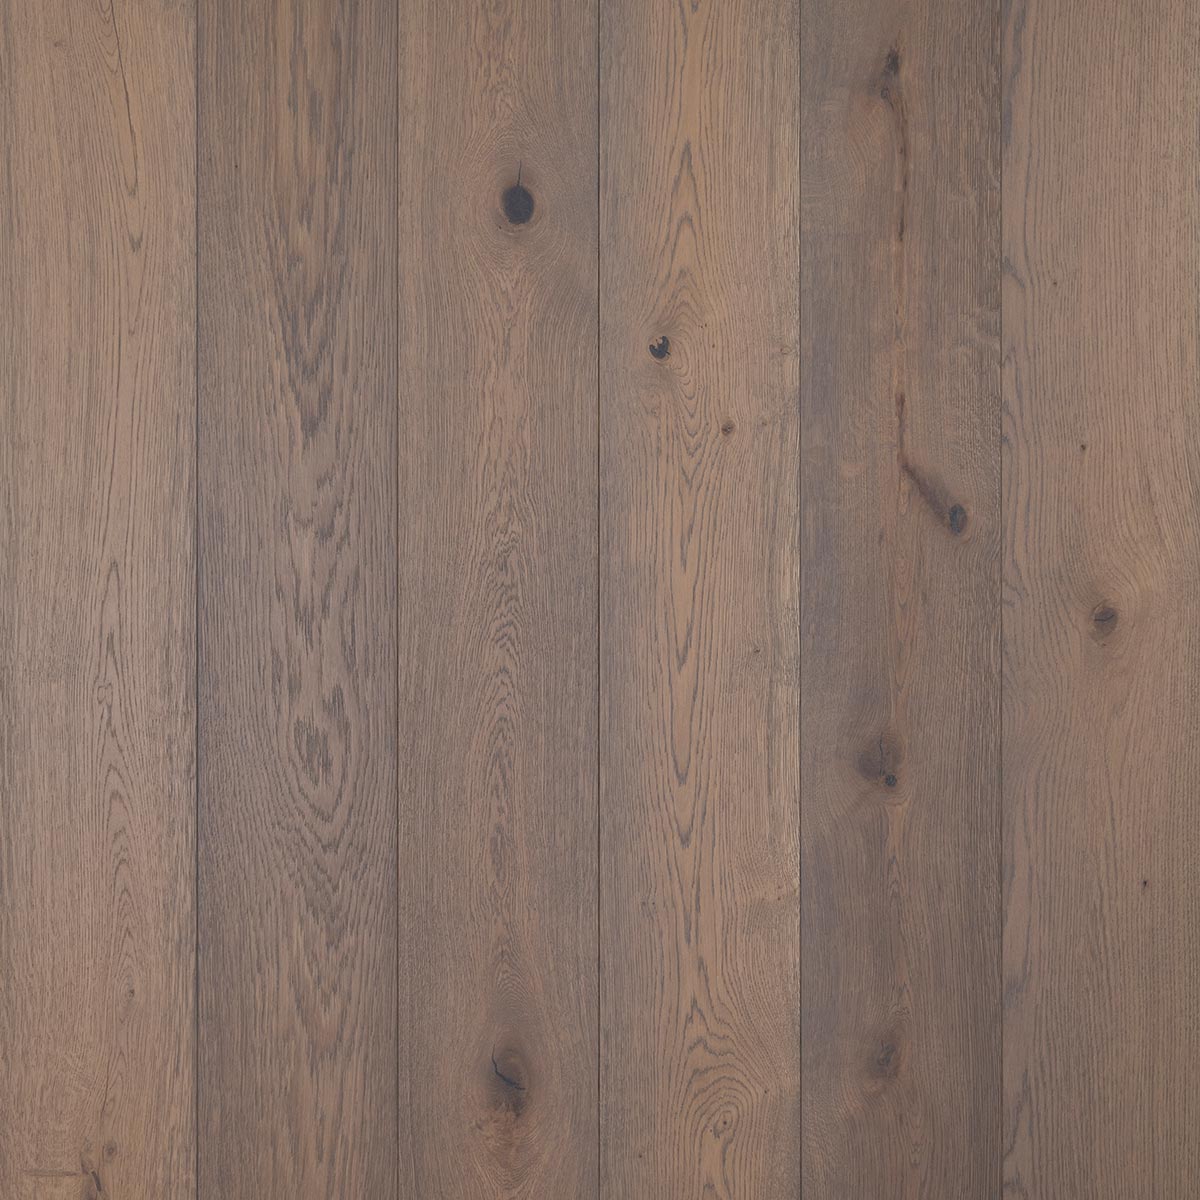 Multiply oak wood flooring named Cambridge Smoke